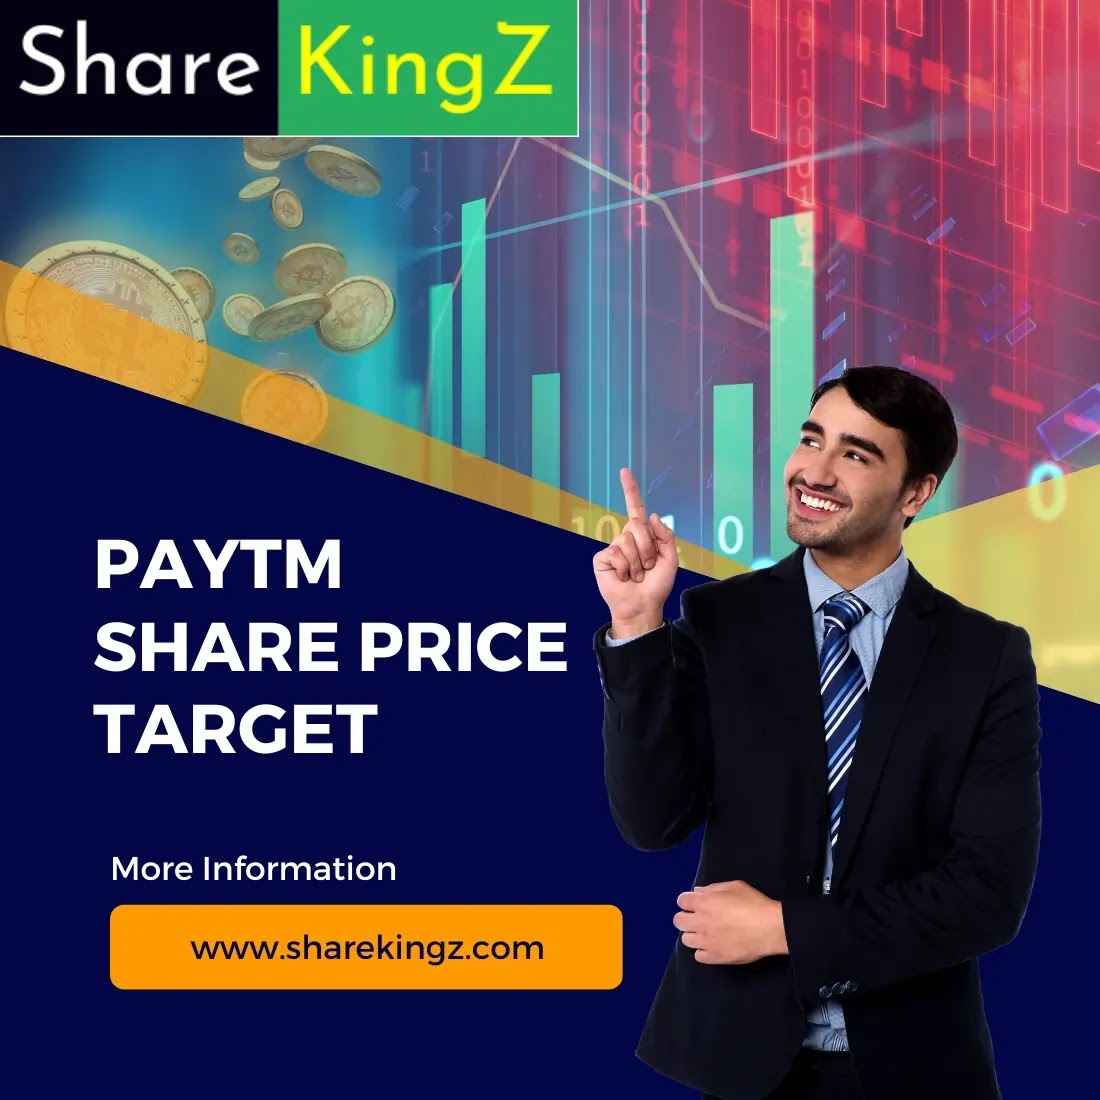 Paytm share price target